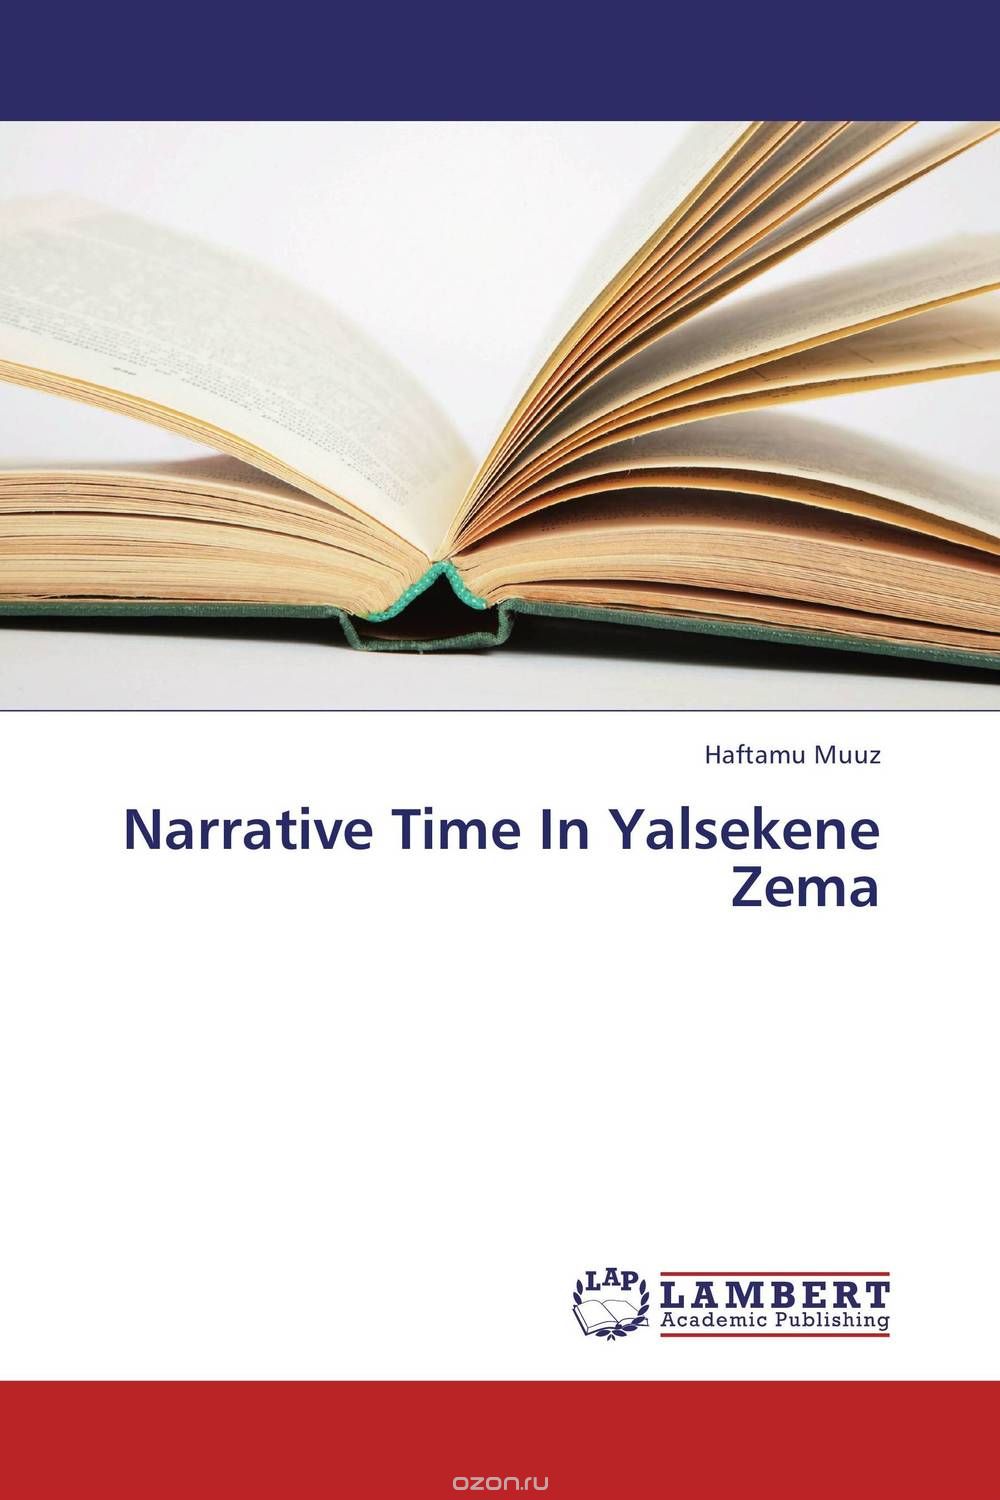 Скачать книгу "Narrative Time In Yalsekene Zema"